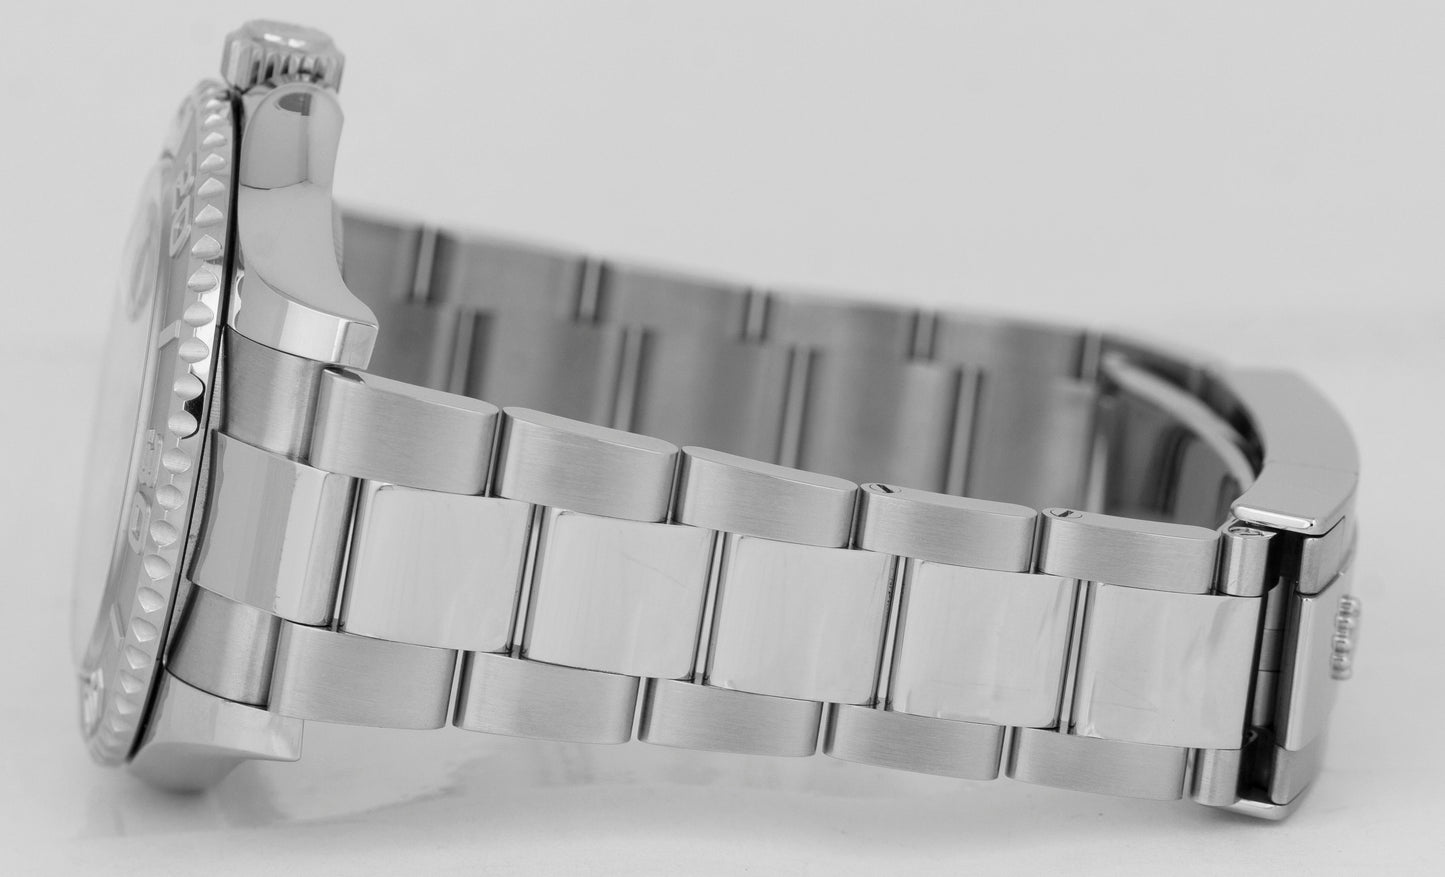 MINT PAPERS Rolex Yacht-Master 40mm Rhodium Platinum Stainless Watch 126622 B+P